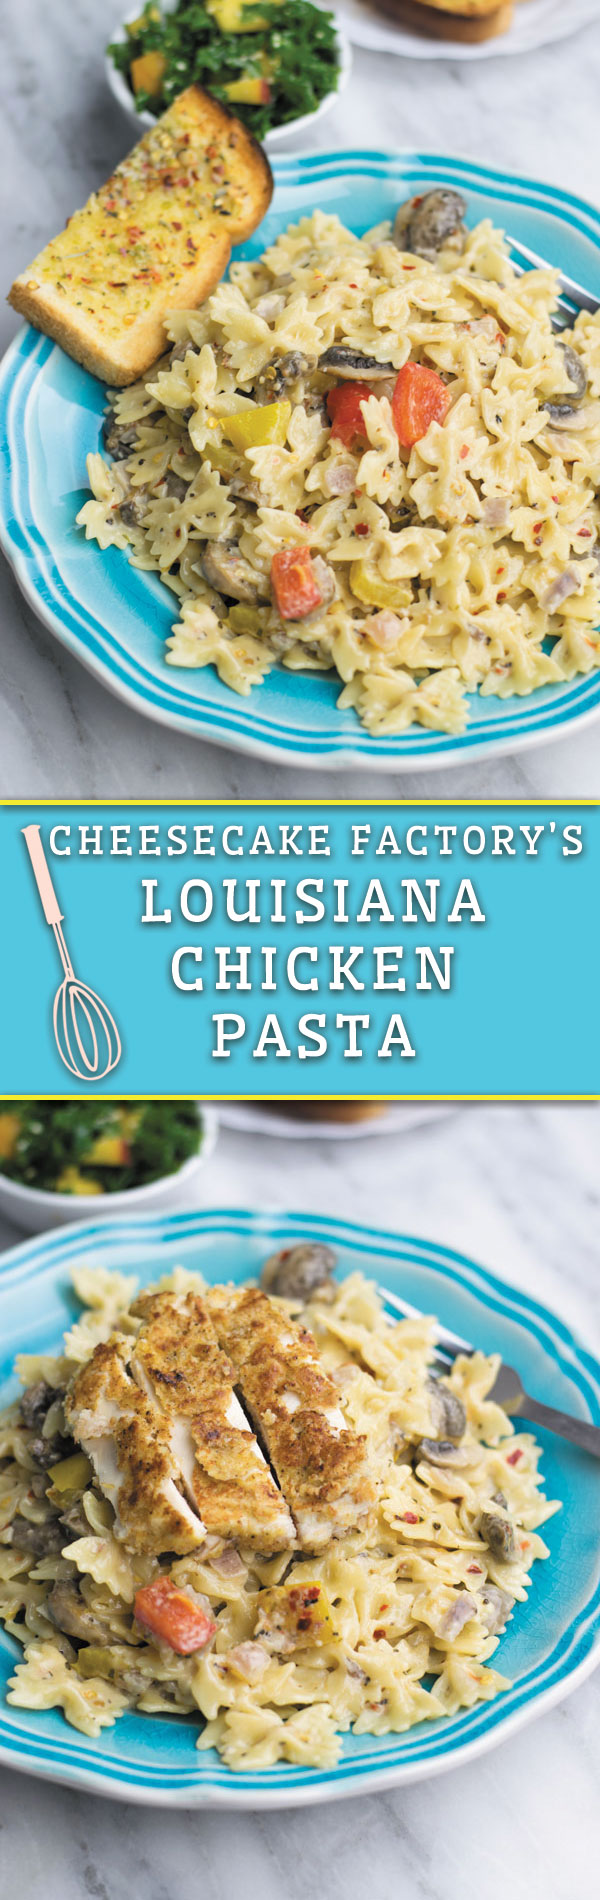 cheesecake-factory's-louisiana-chicken-pasta-pinterest